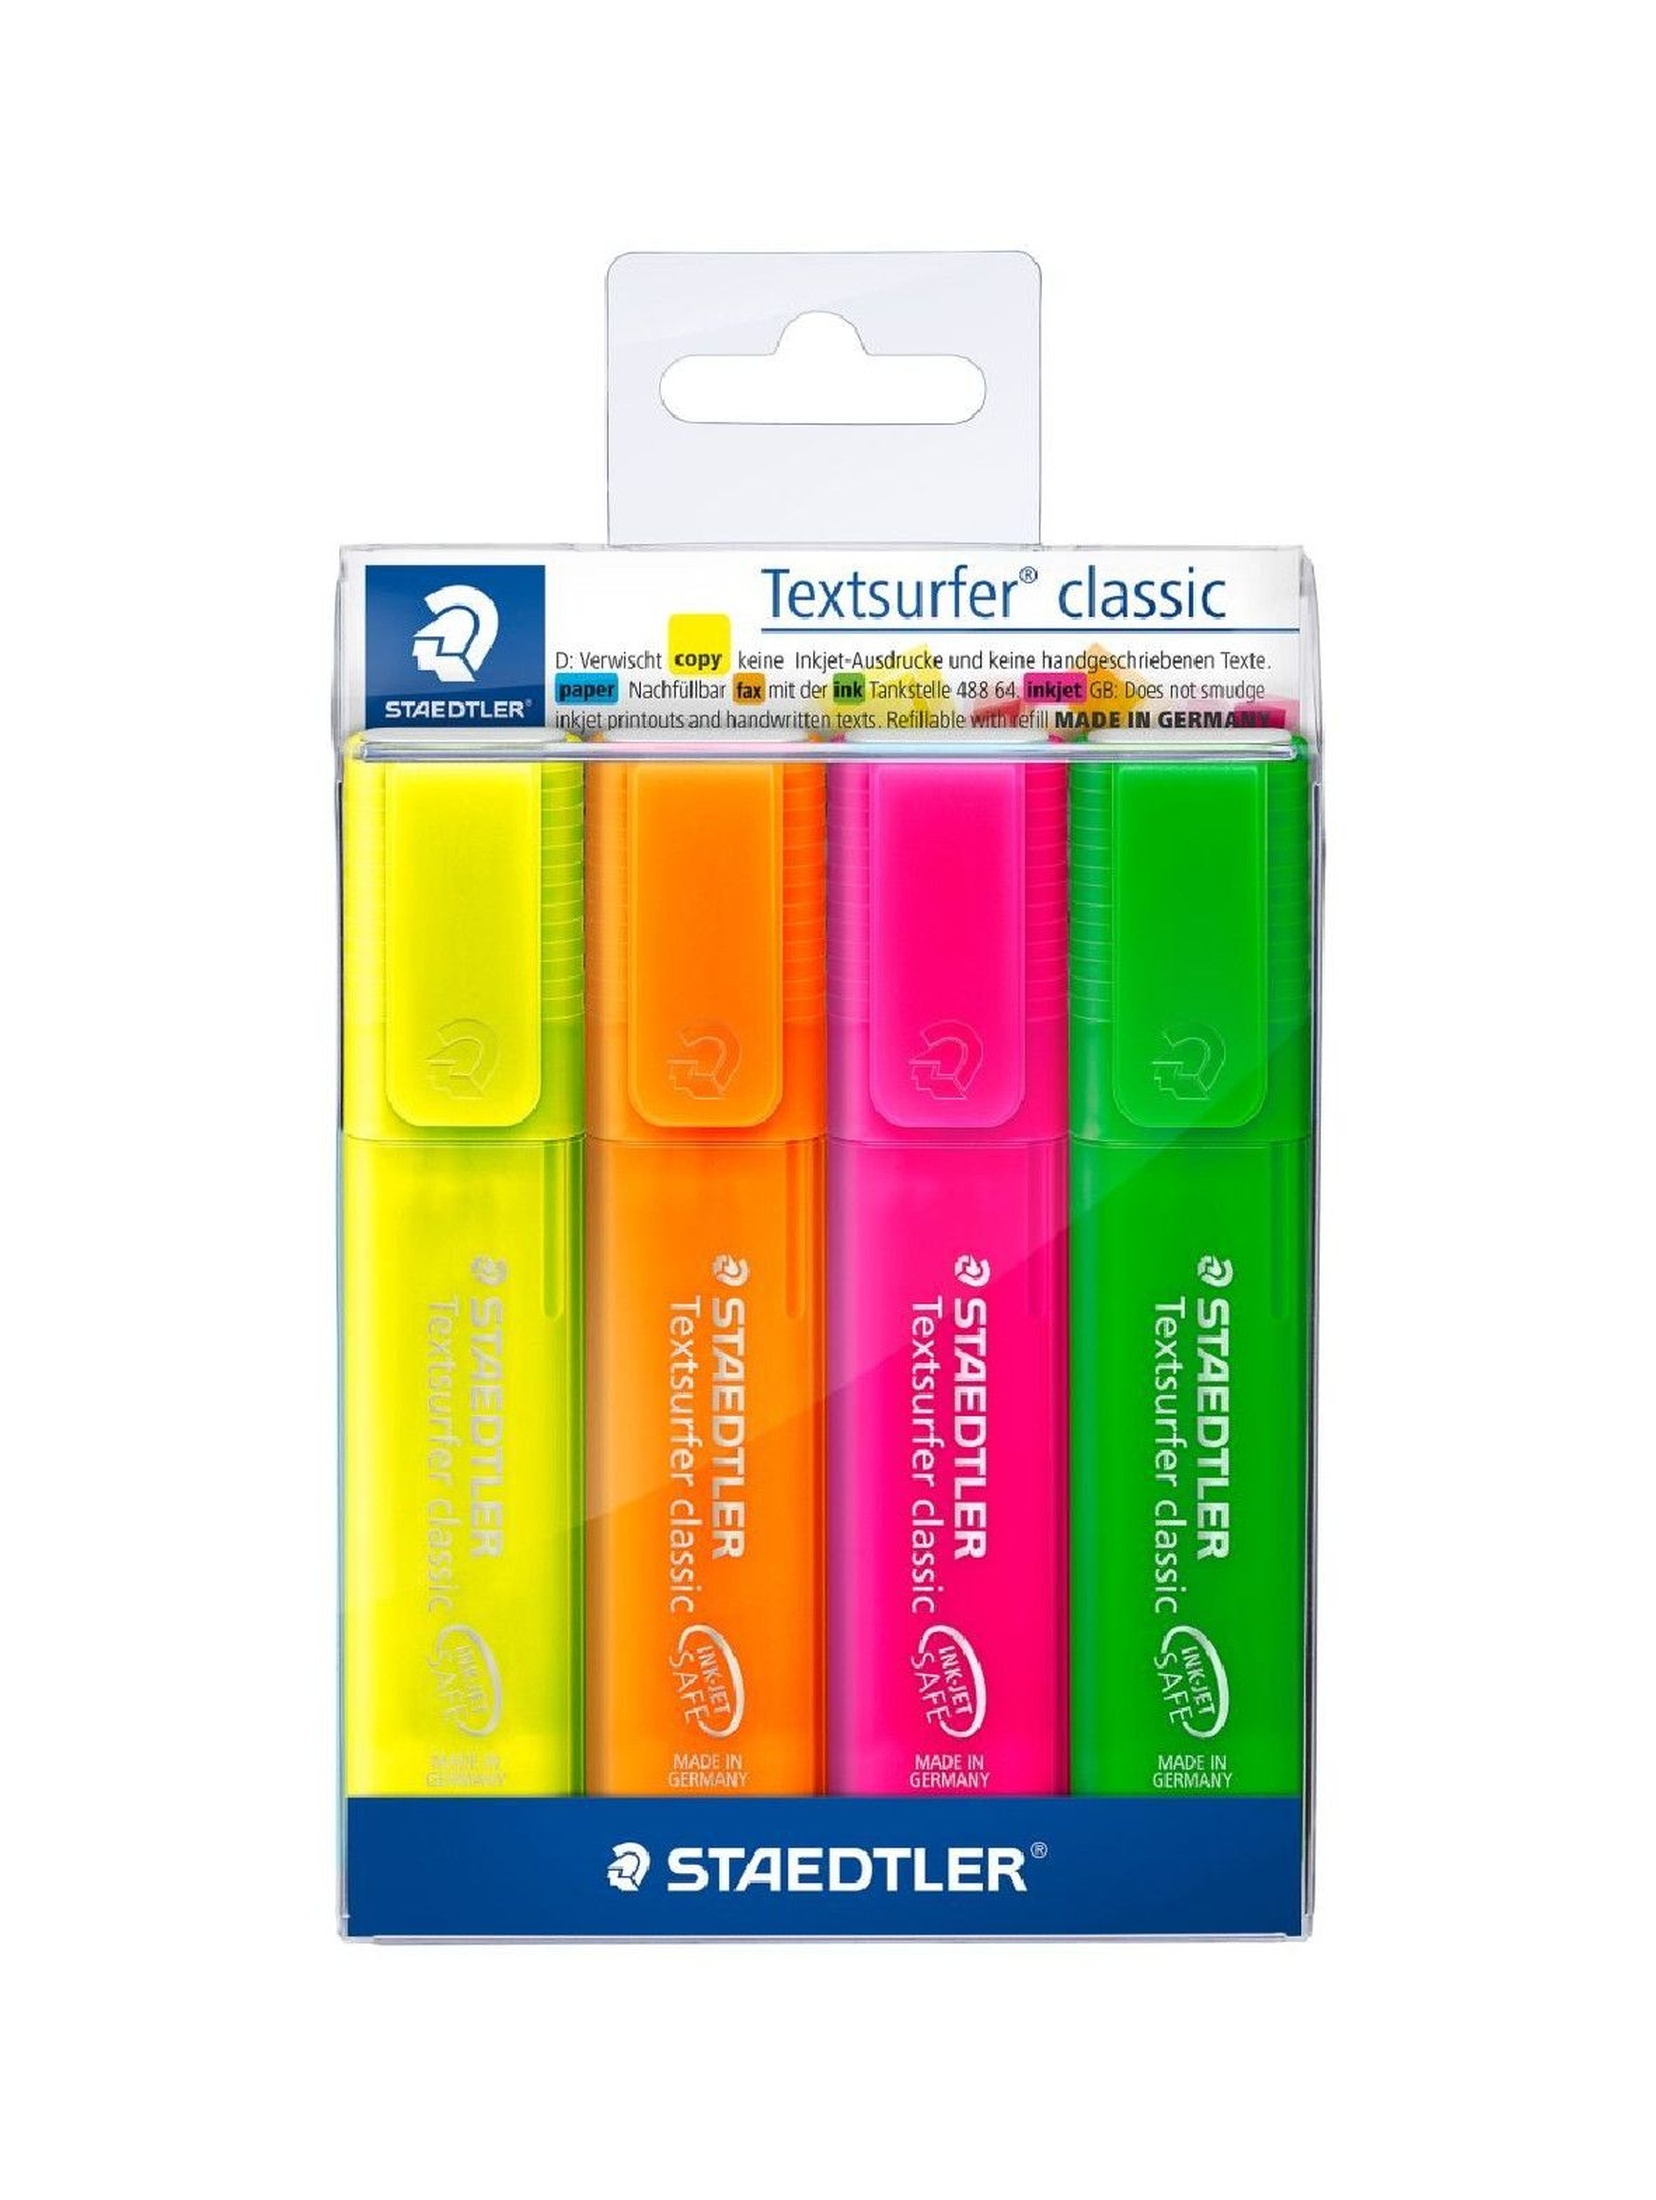 Zakreślacz Textsurfer classic Staedtler - 4 kolory neon